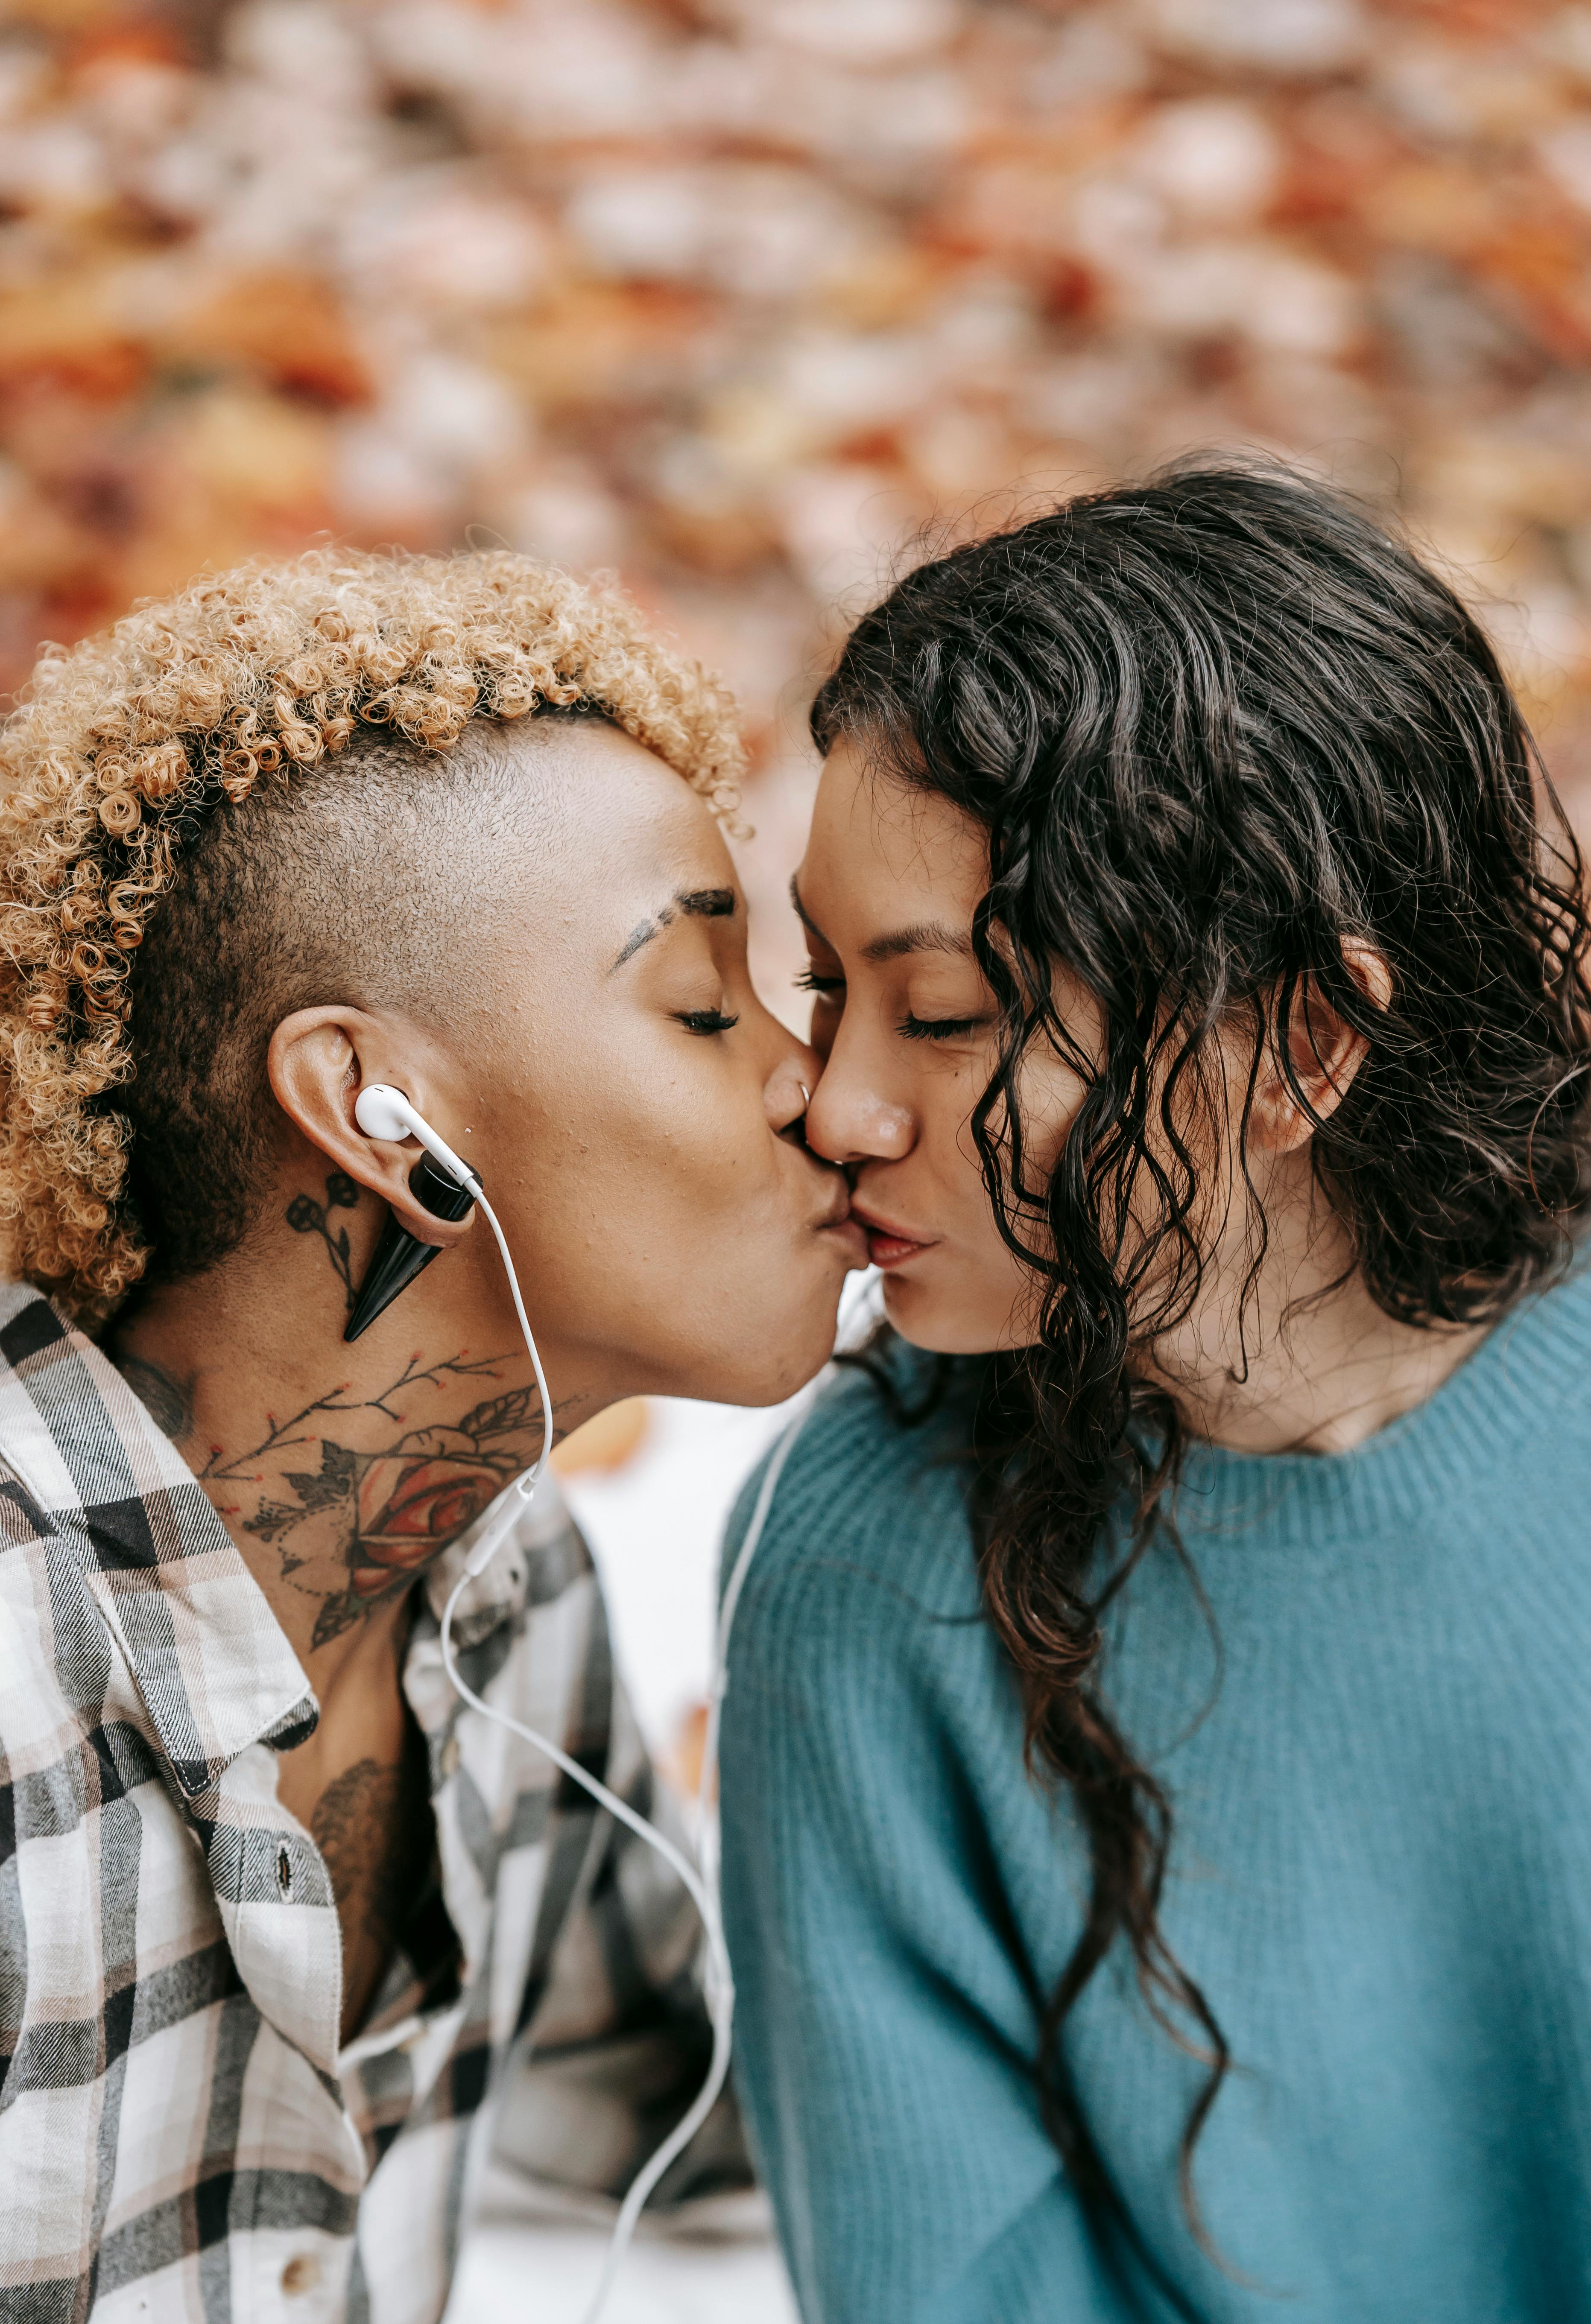 Black Lesbians Free Download